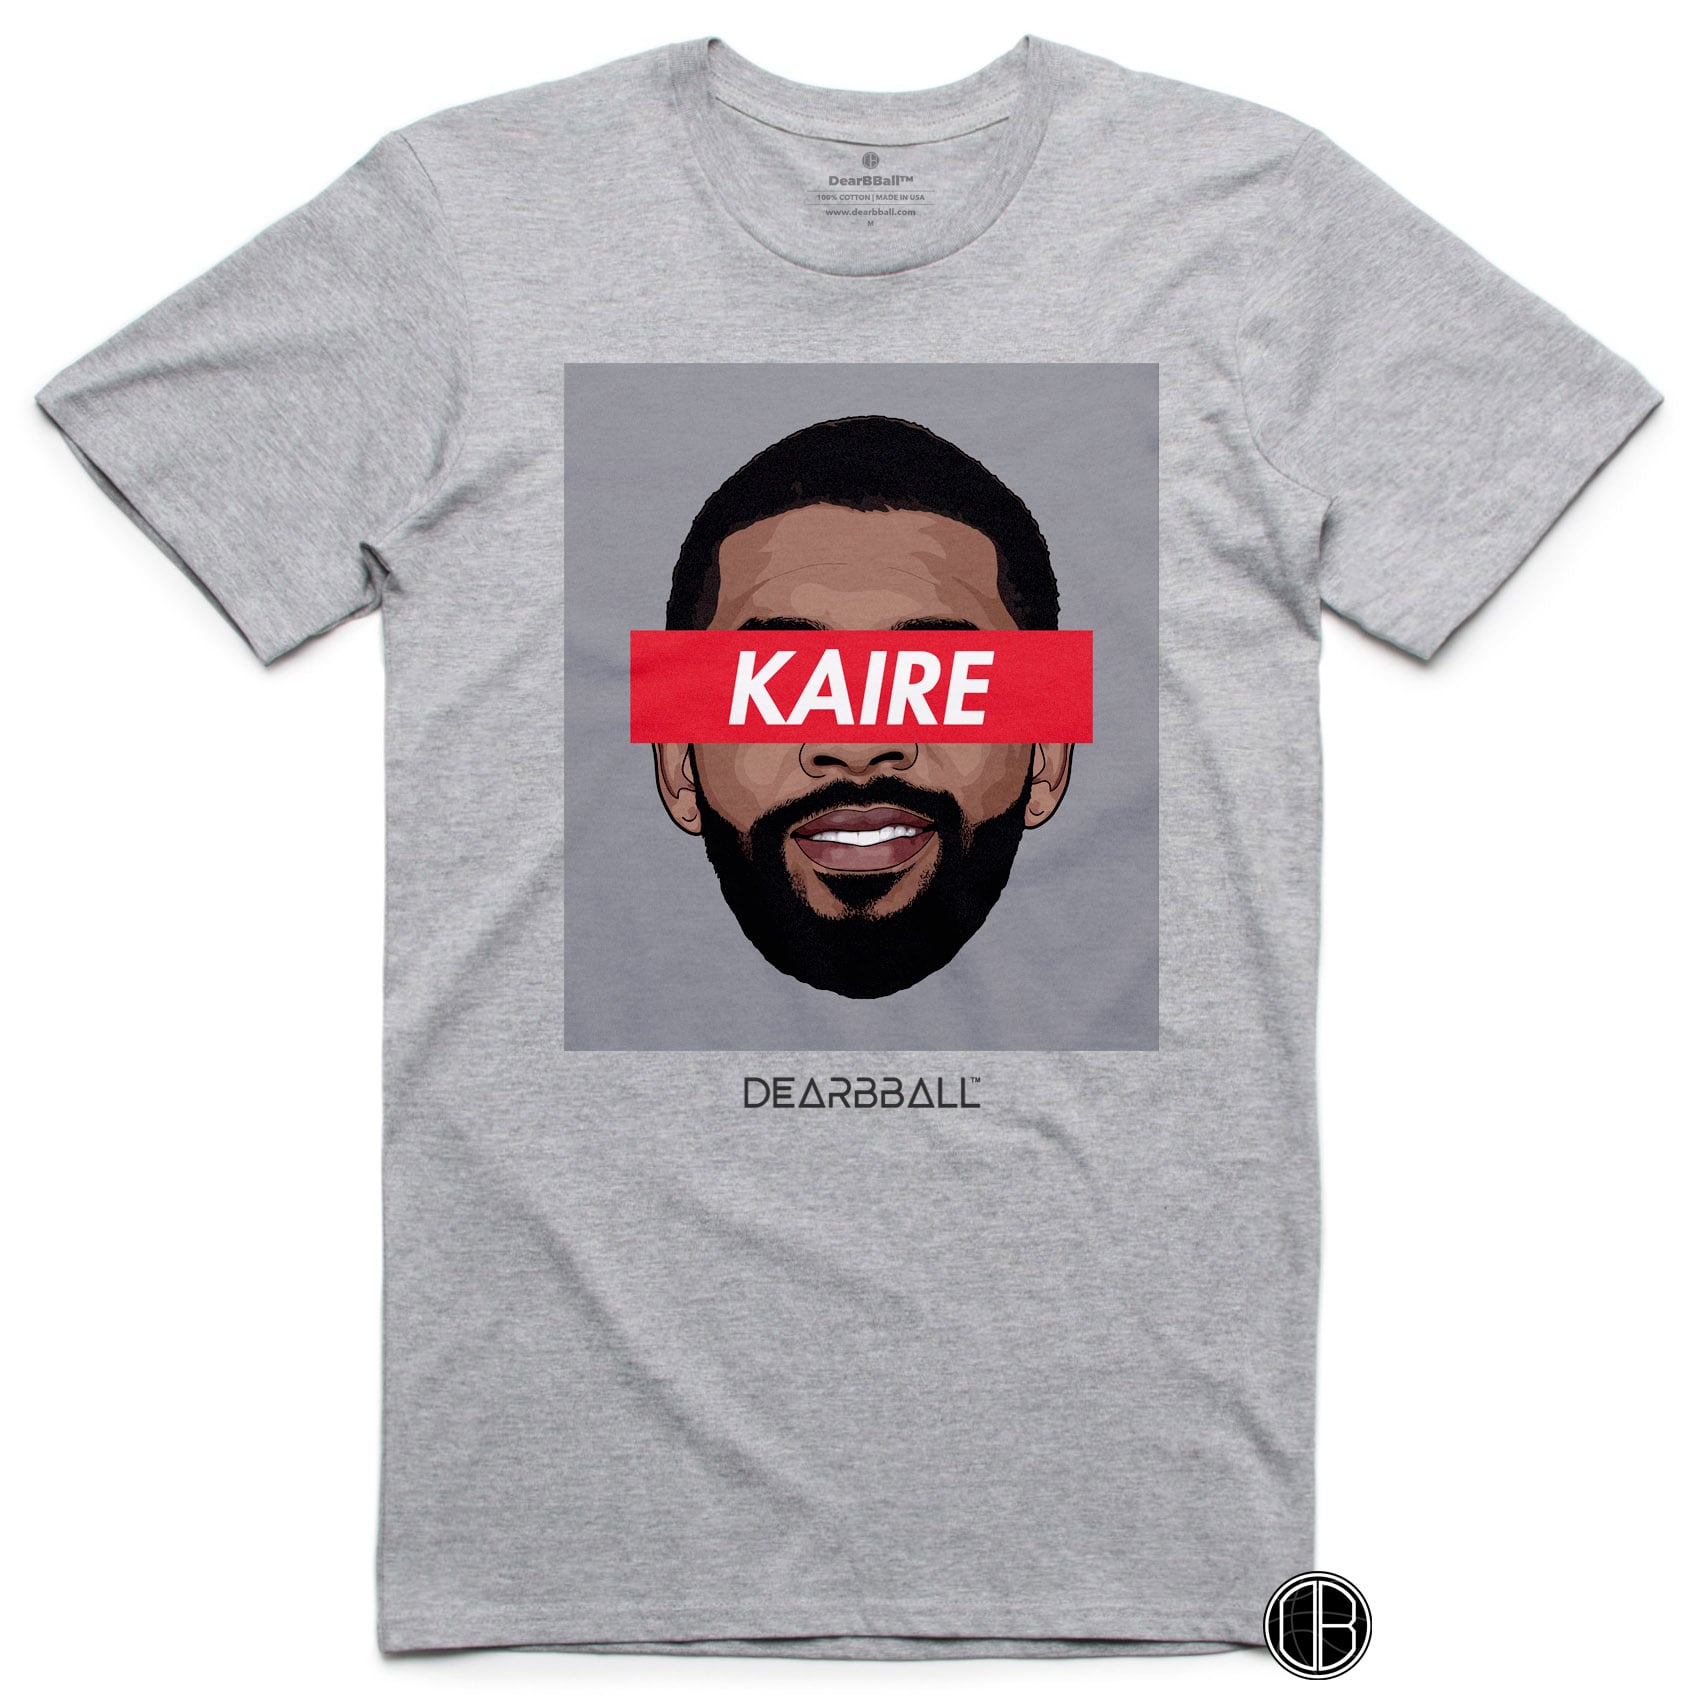 Kyrie Irving Duke Shirt, Duke T-Shirt, College Tee, - Depop